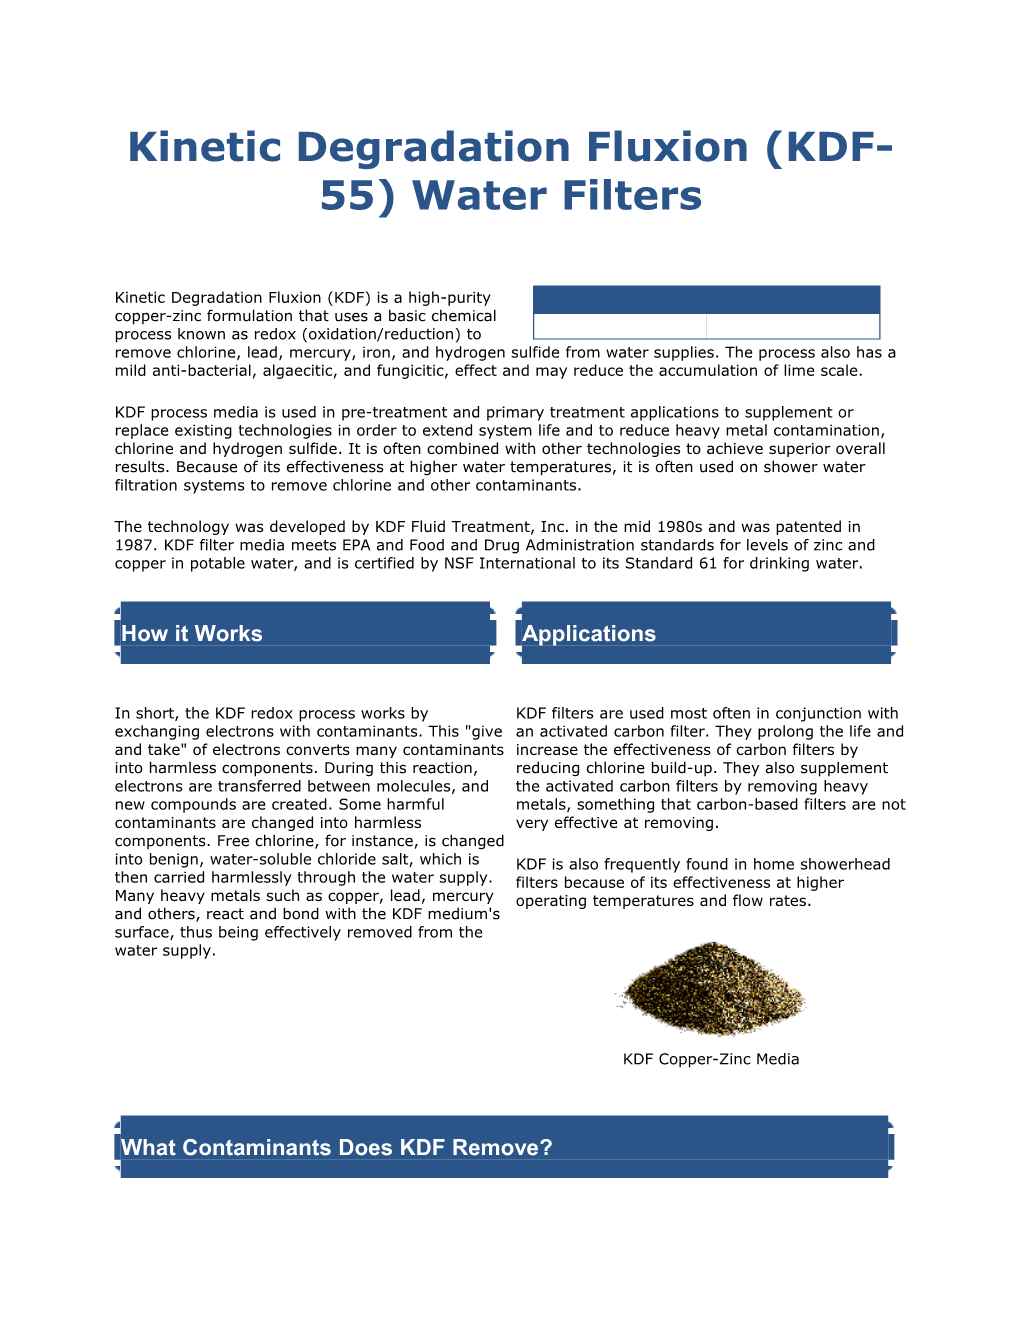 Kinetic Degradation Fluxion (KDF-55) Water Filters